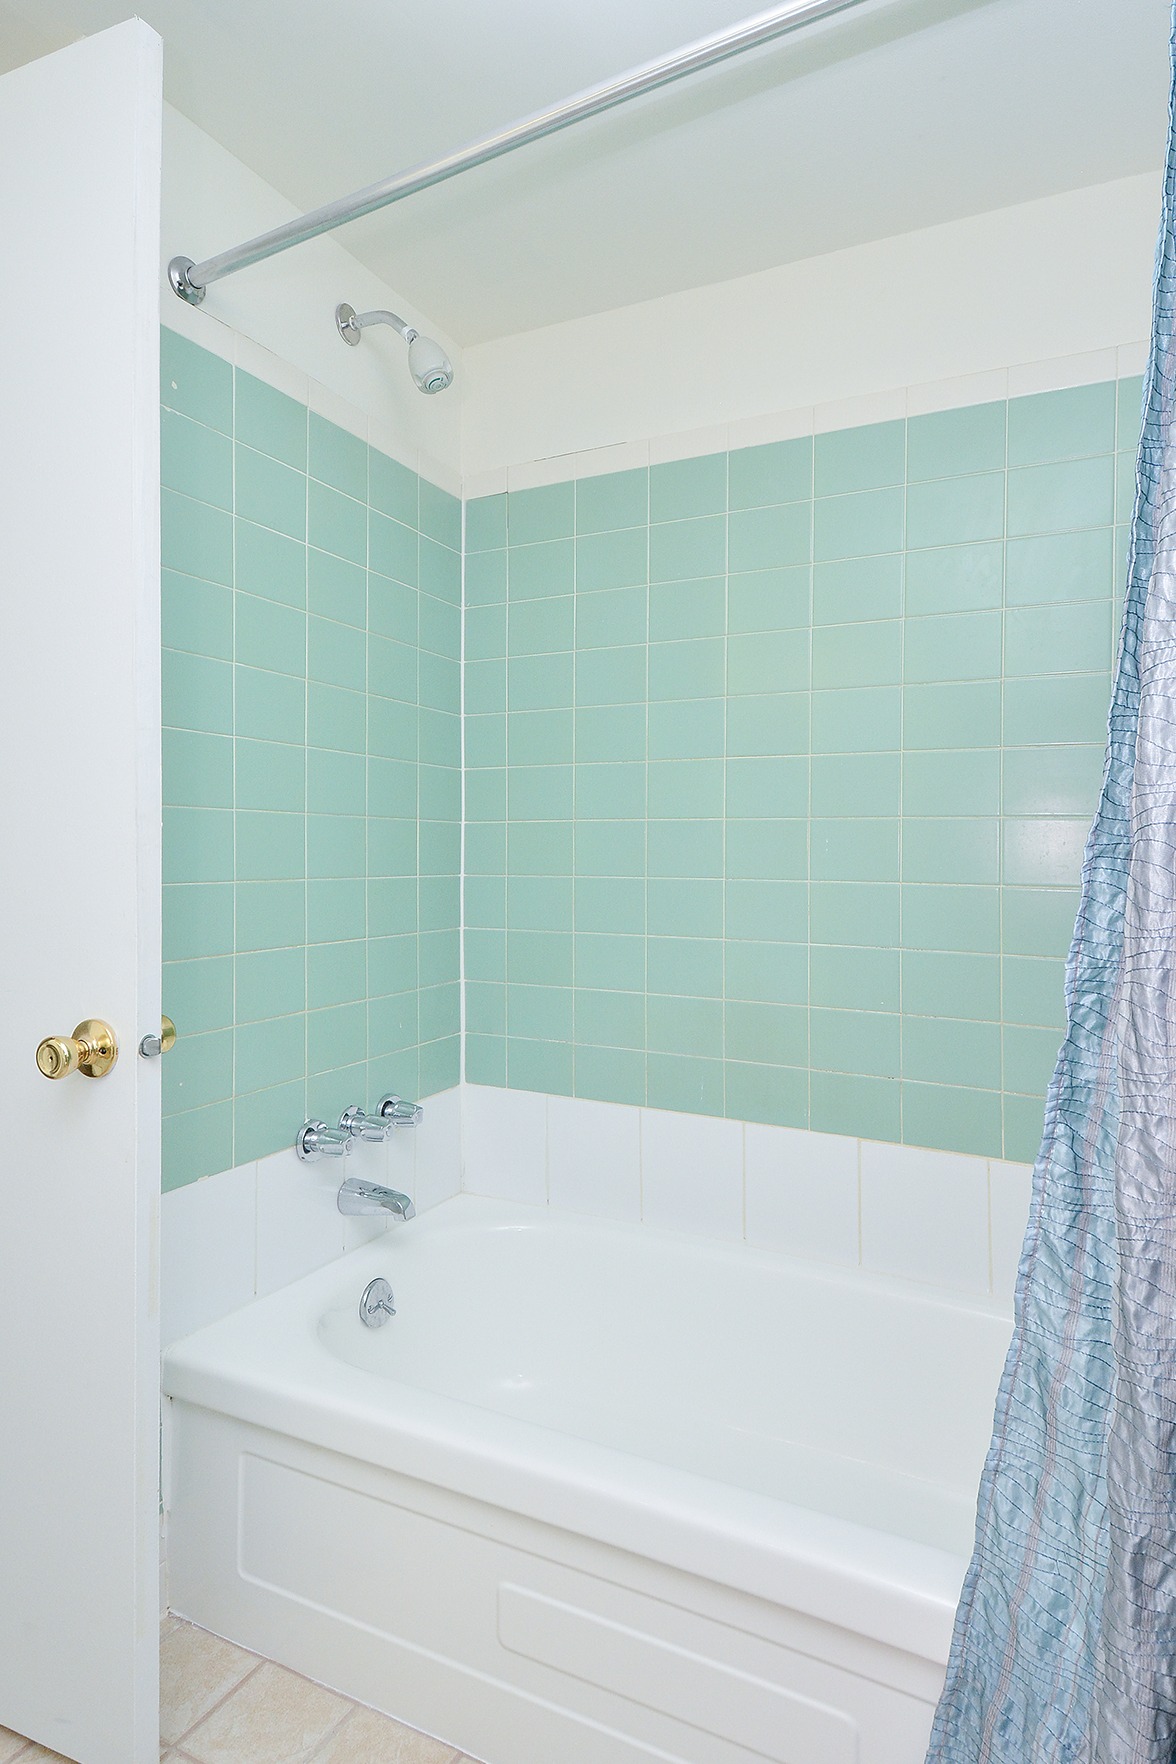 Bathtub with mint tiles.